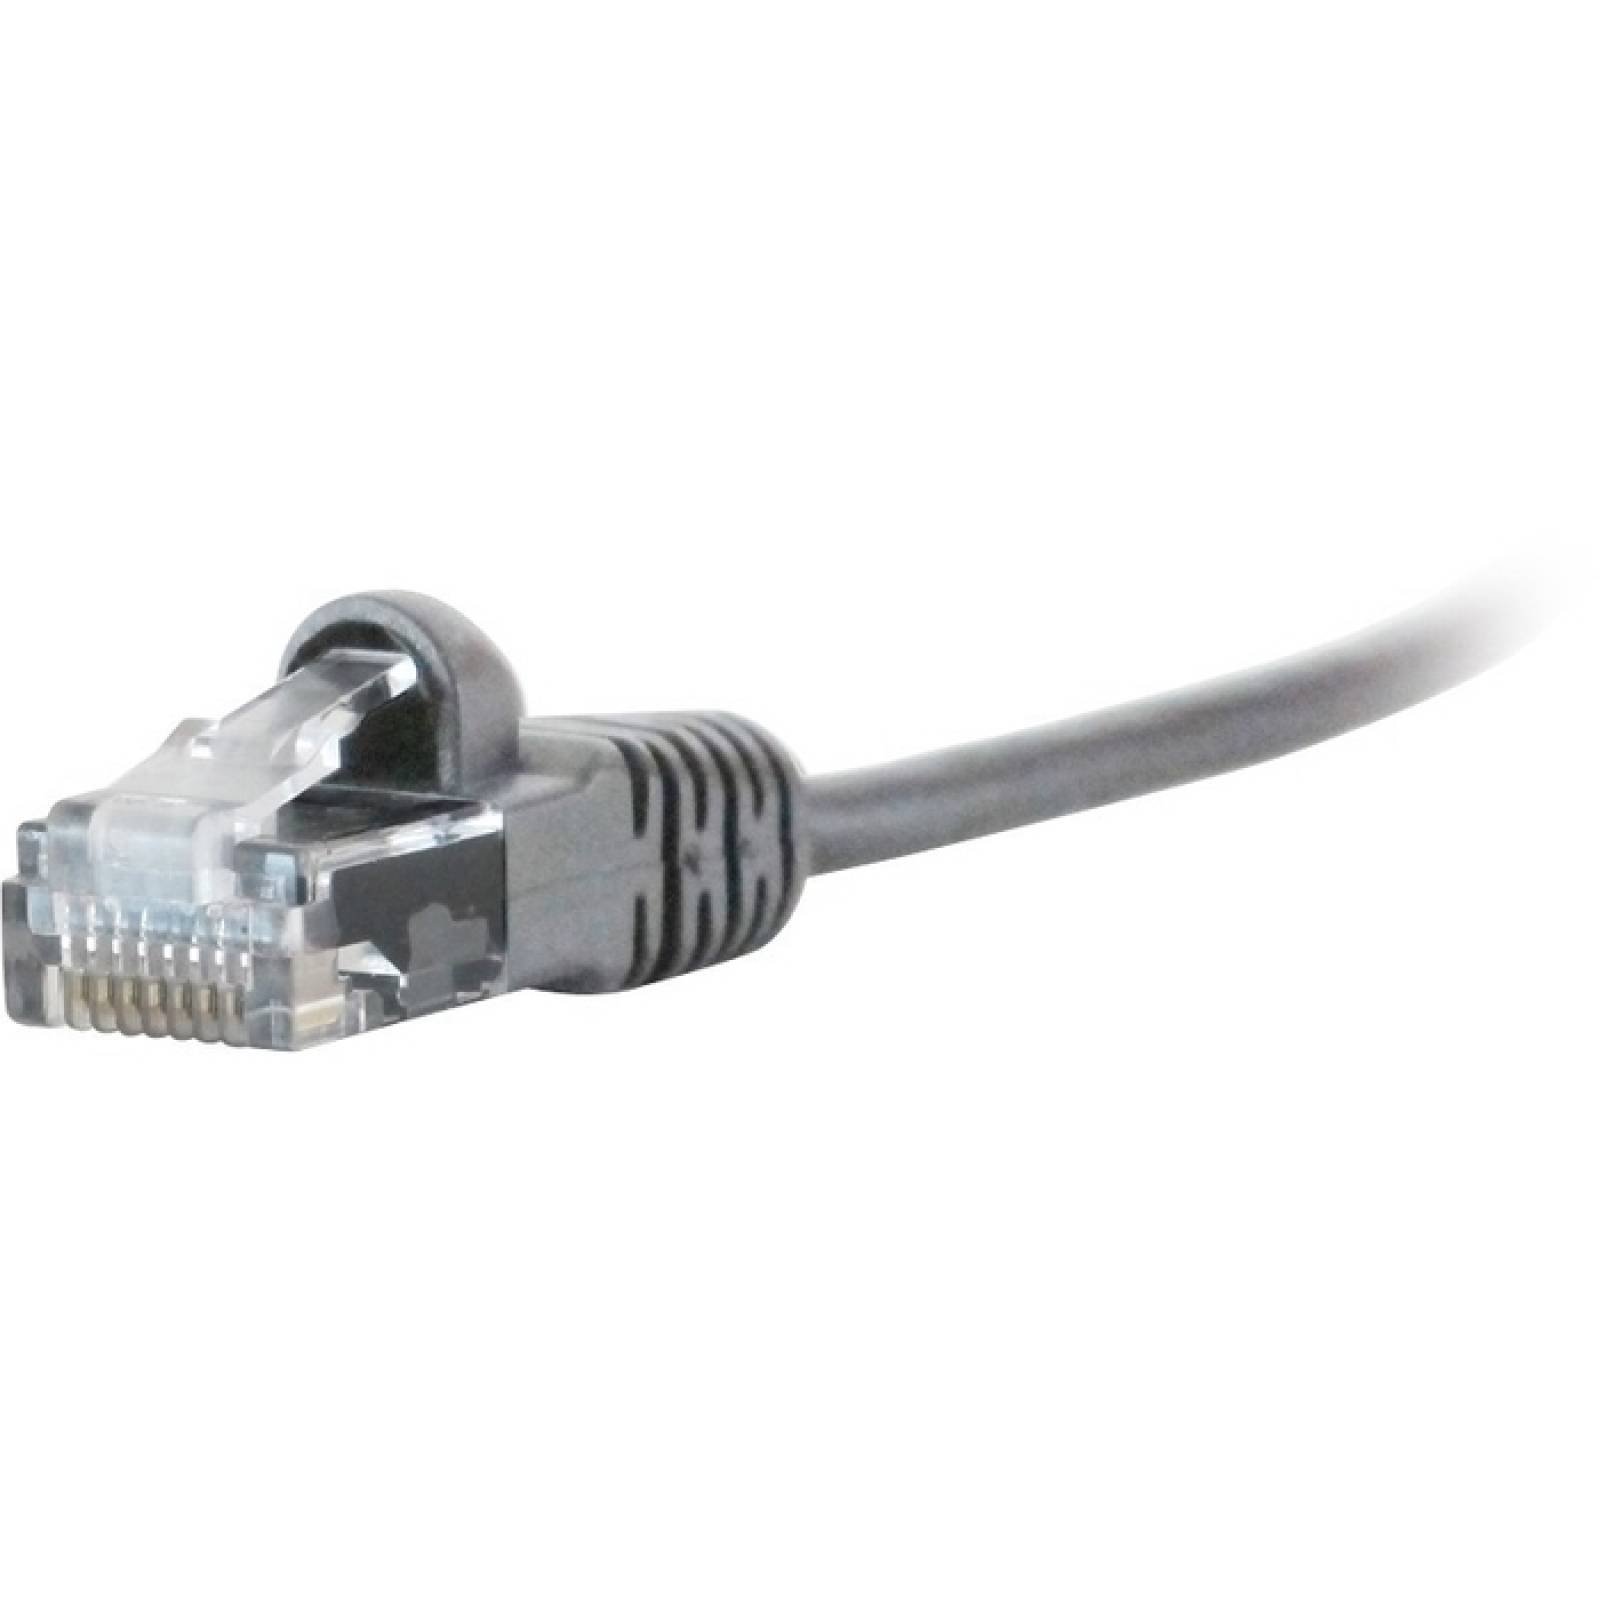 Cable completo de conexin MicroFlex Pro AV  IT CAT6 sin enganche gris 3 pies